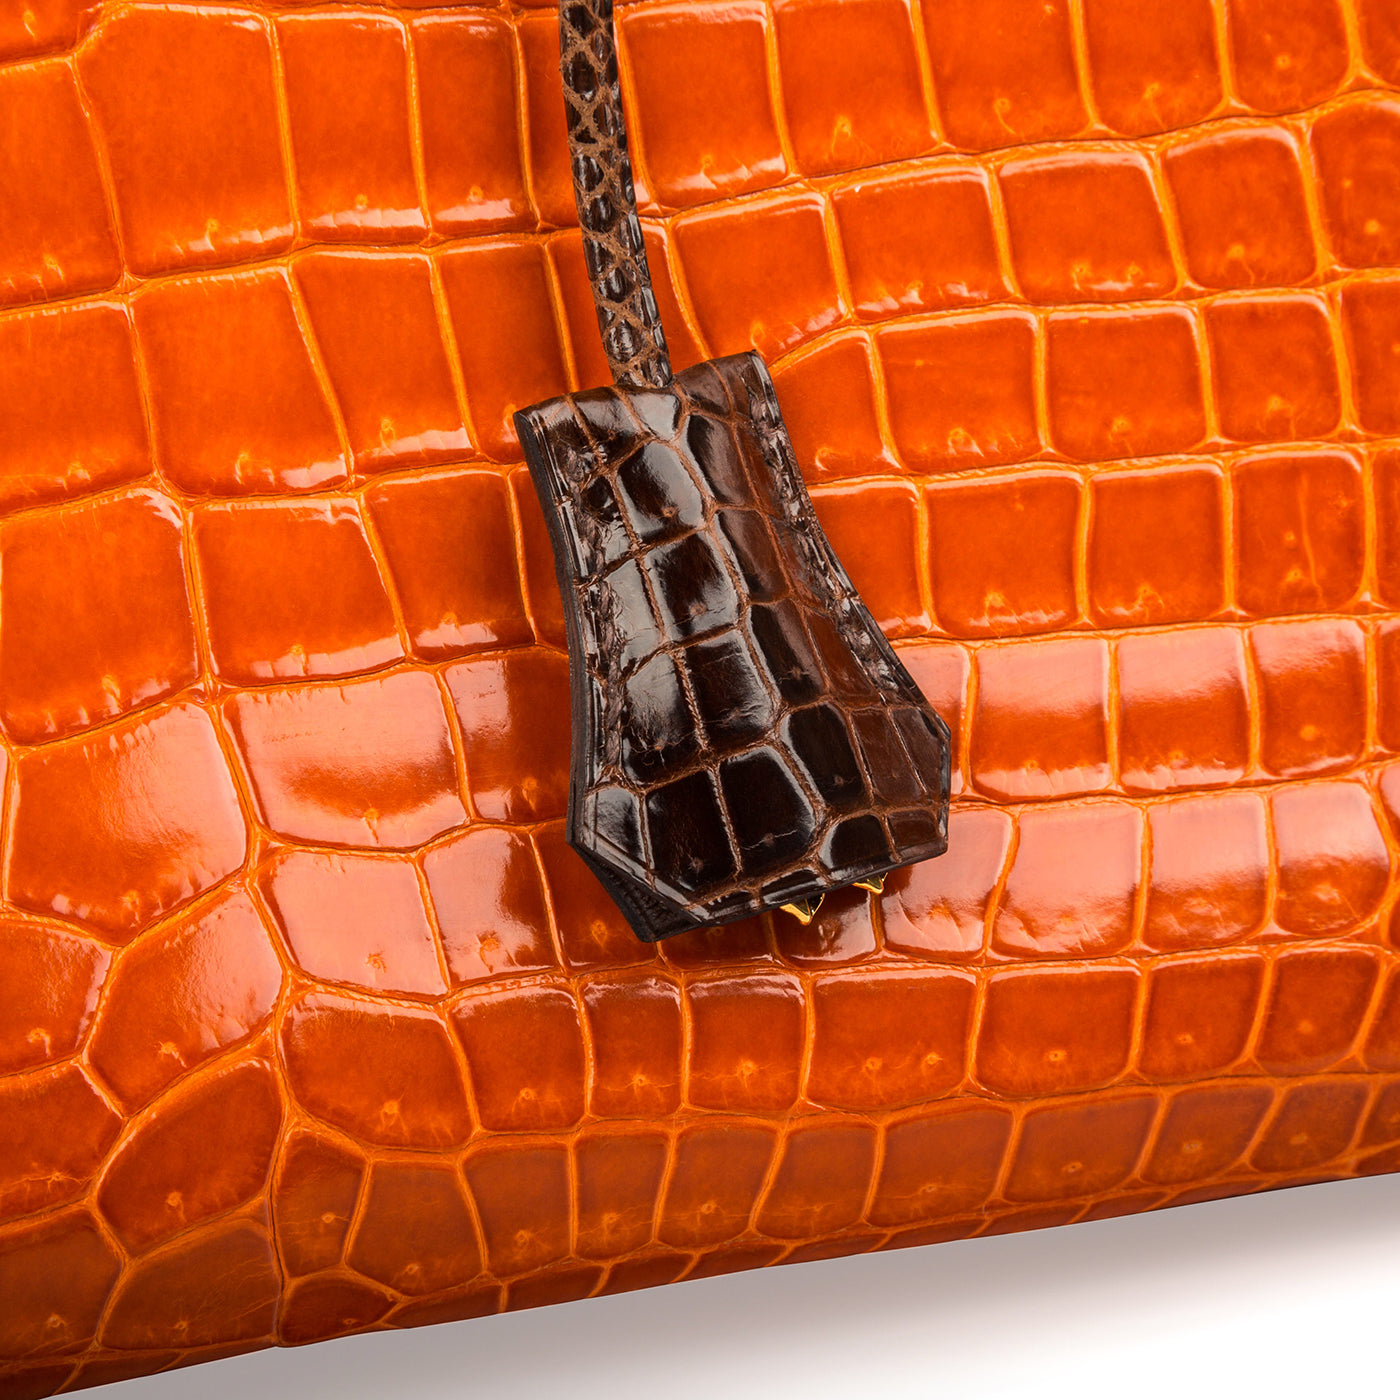 Birkin 35 crocodile handbag Hermès Purple in Crocodile - 5959632